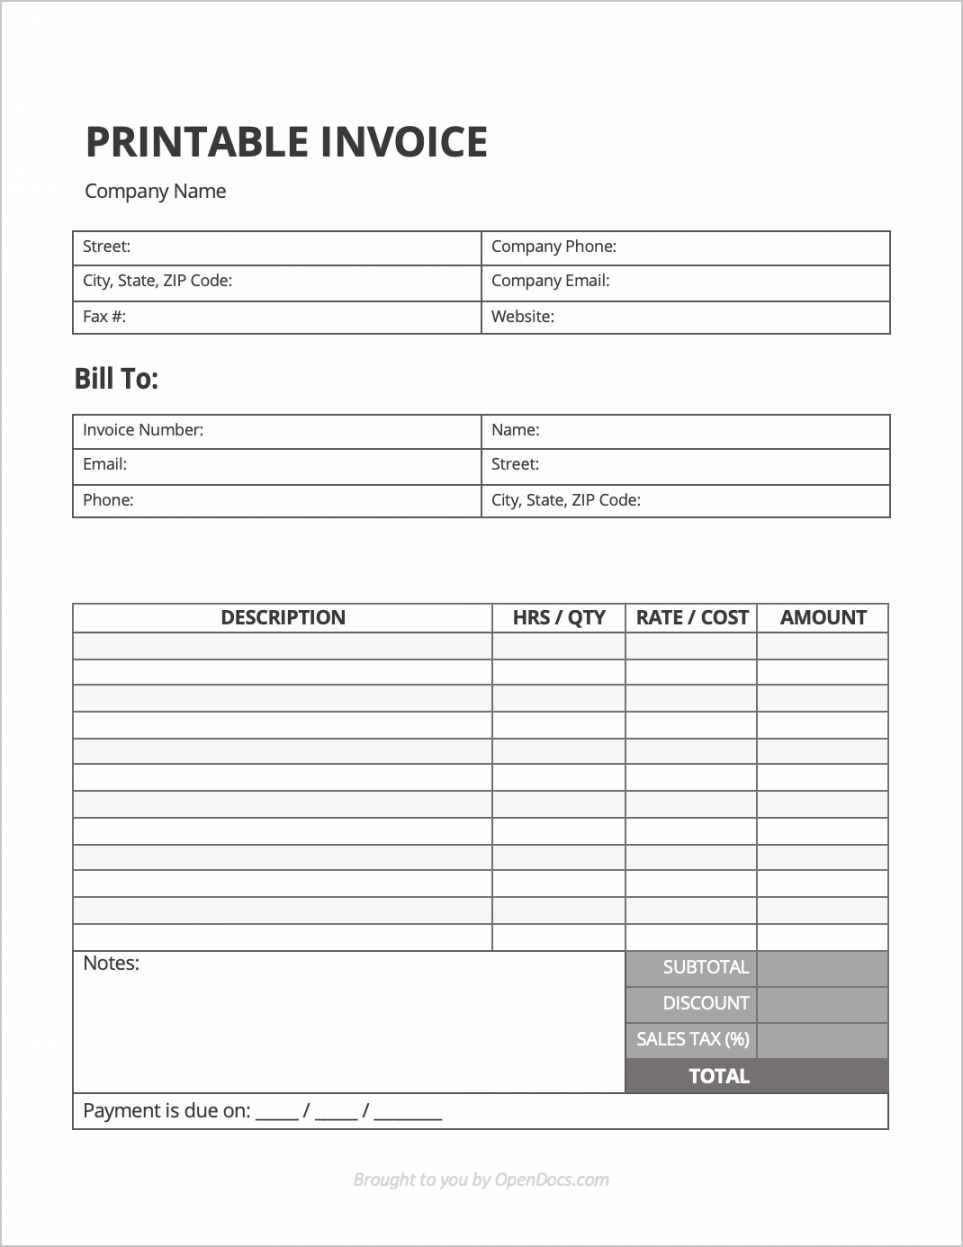 Printable Invoices Free Template - Printable - Free Printable Invoice Template  PDF  WORD  EXCEL